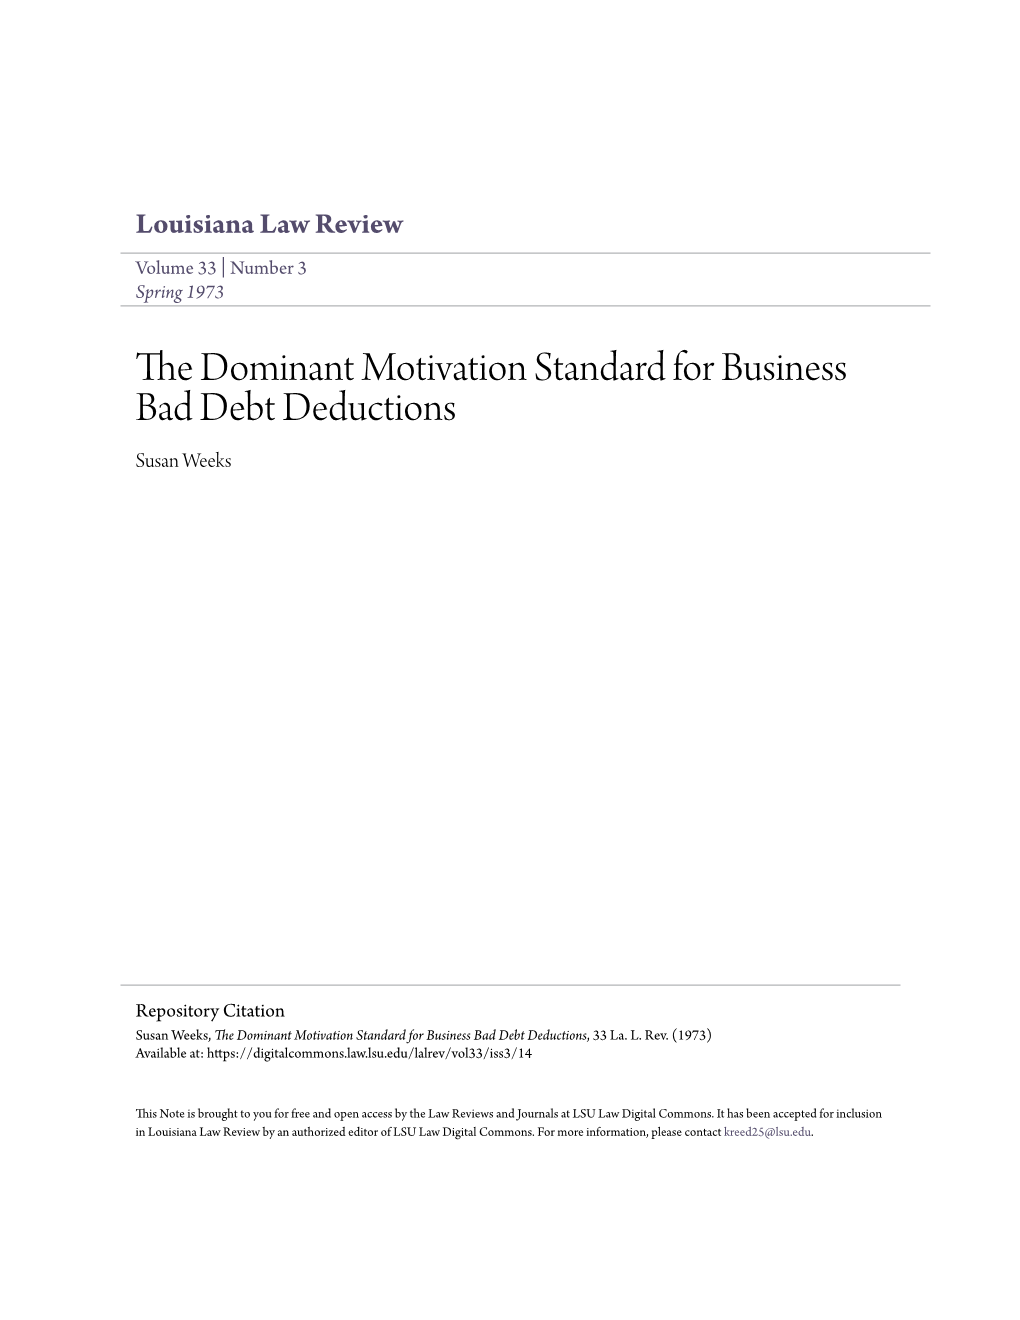 The Dominant Motivation Standard for Business Bad Debt Deductions, 33 La